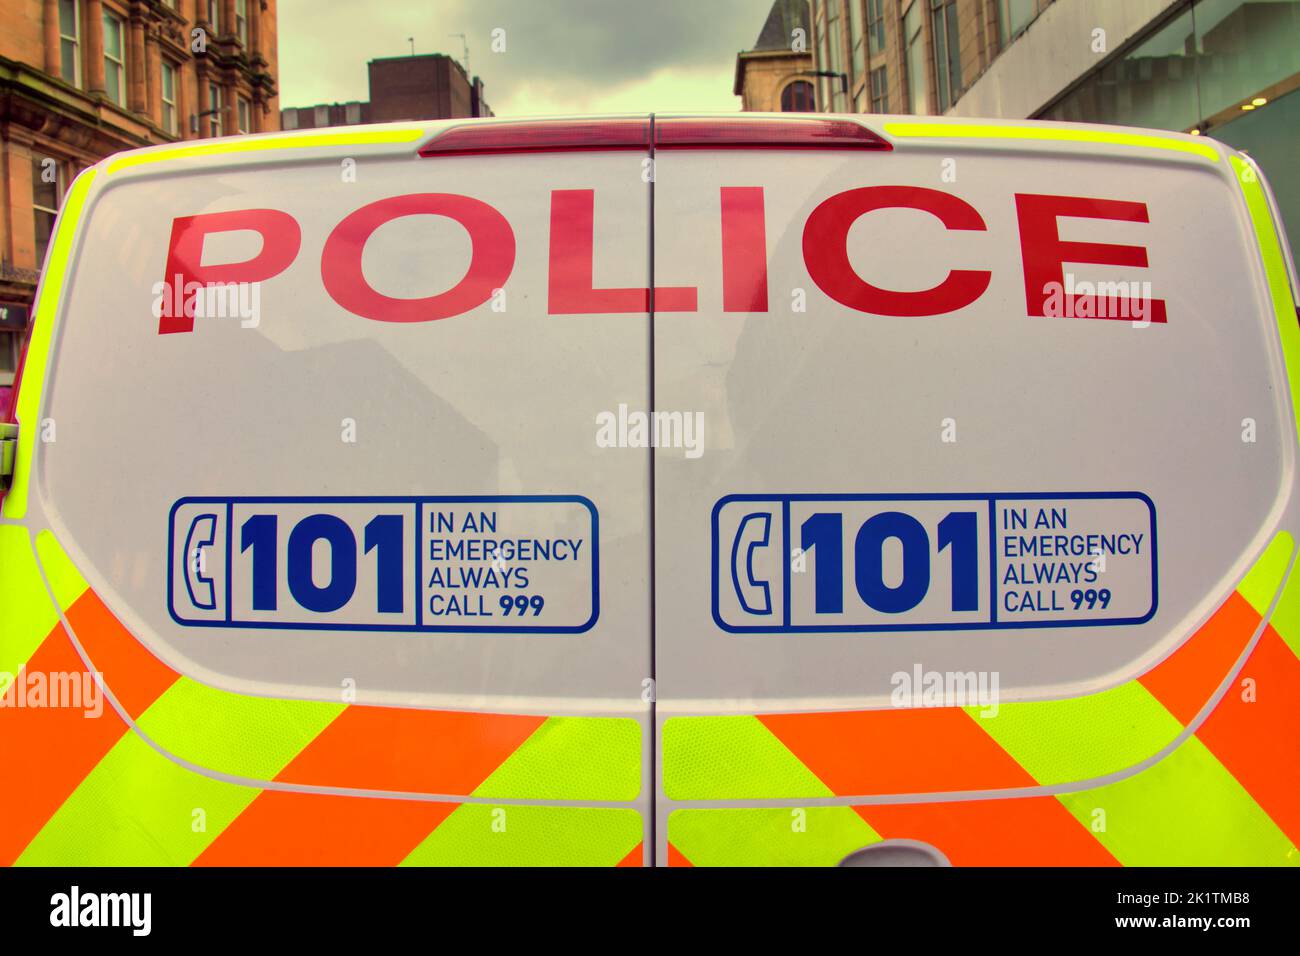 police Scotland alba poleas van car Glasgow, Scotland, UK Stock Photo